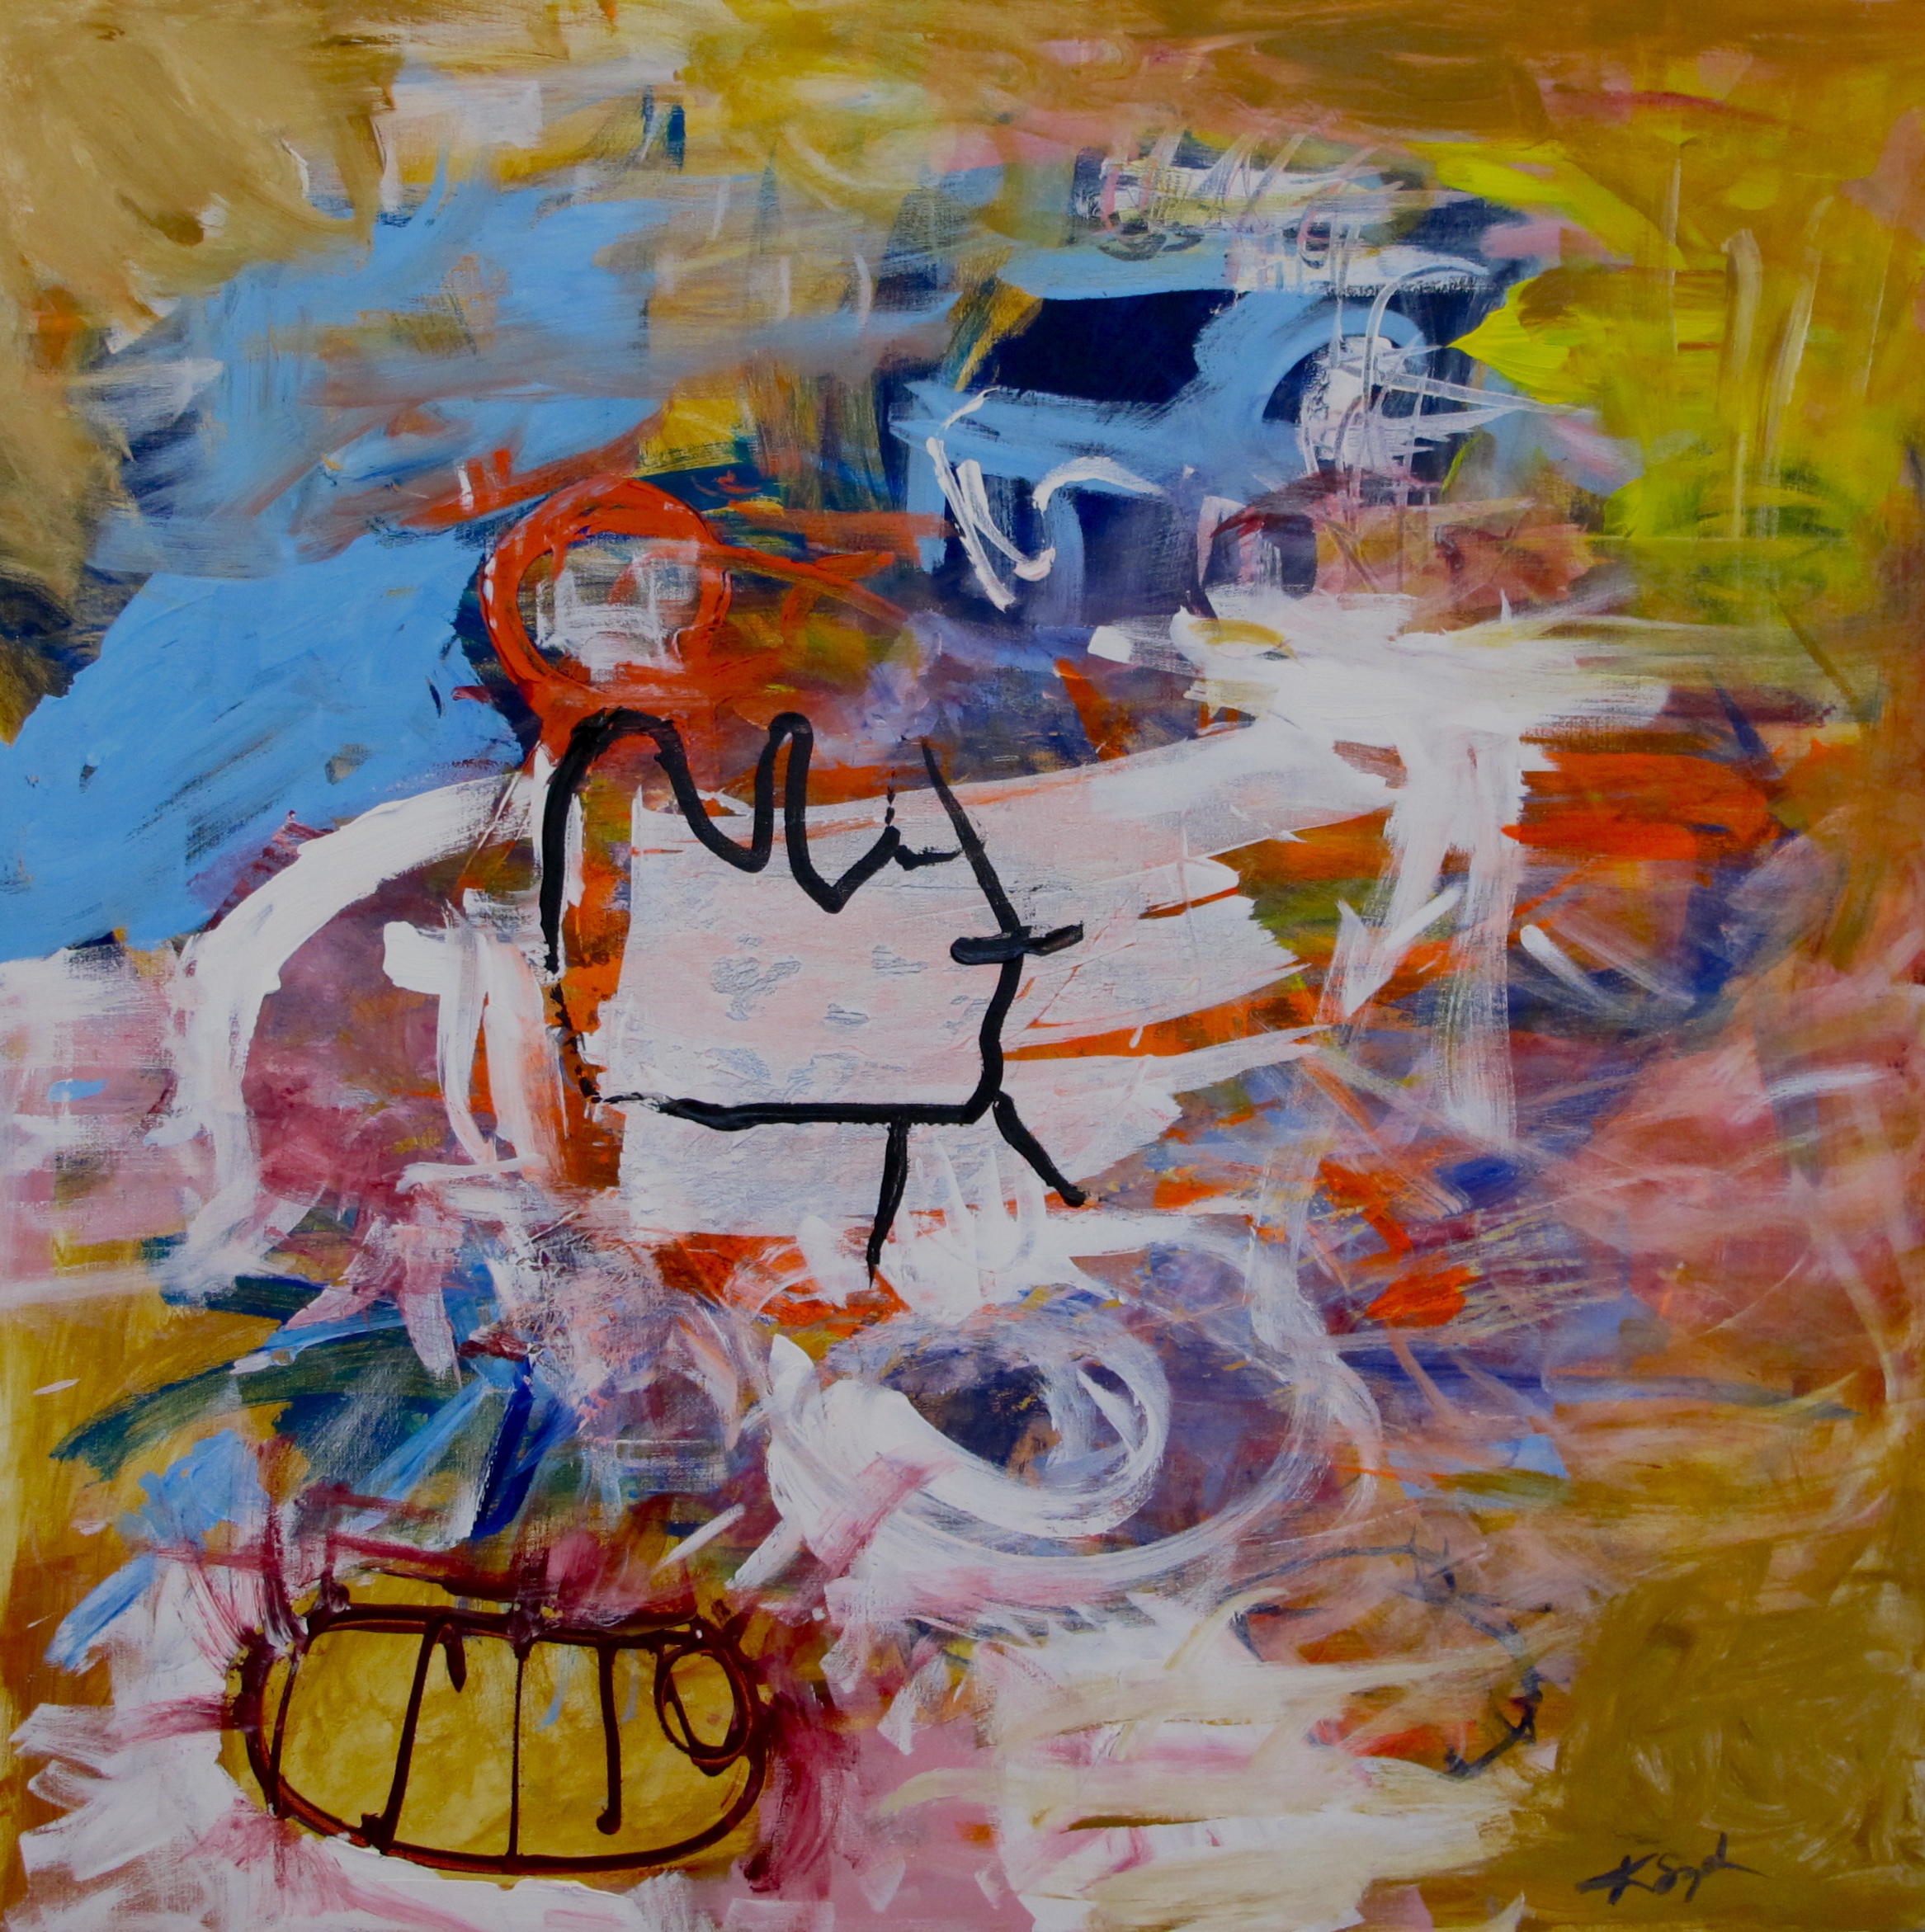 Kara Ruth Snyder, "Chicken", acrylic on canvas, March 2011